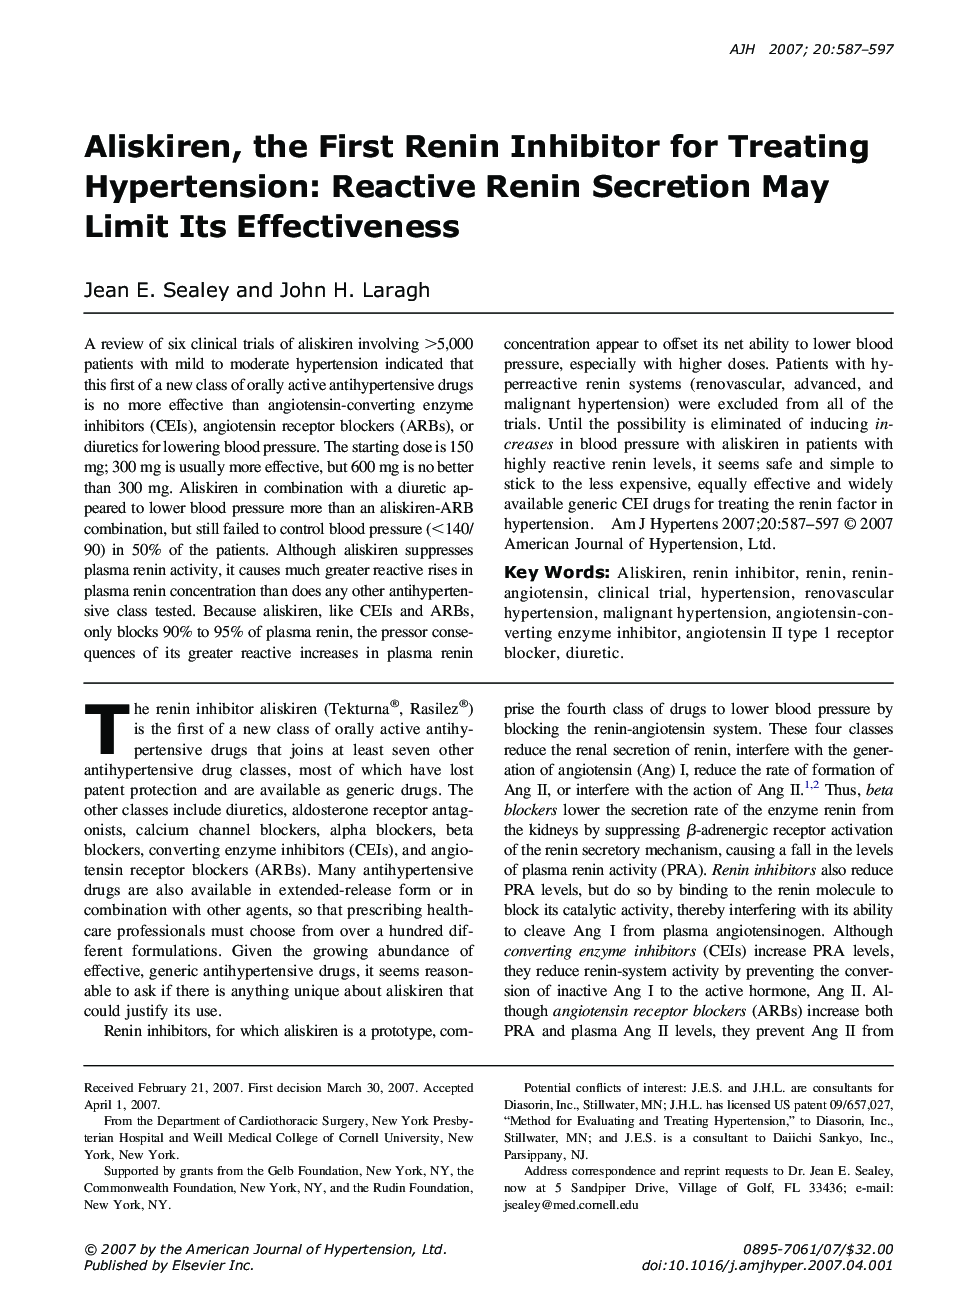 Aliskiren, the First Renin Inhibitor for Treating Hypertension: Reactive Renin Secretion May Limit Its Effectiveness